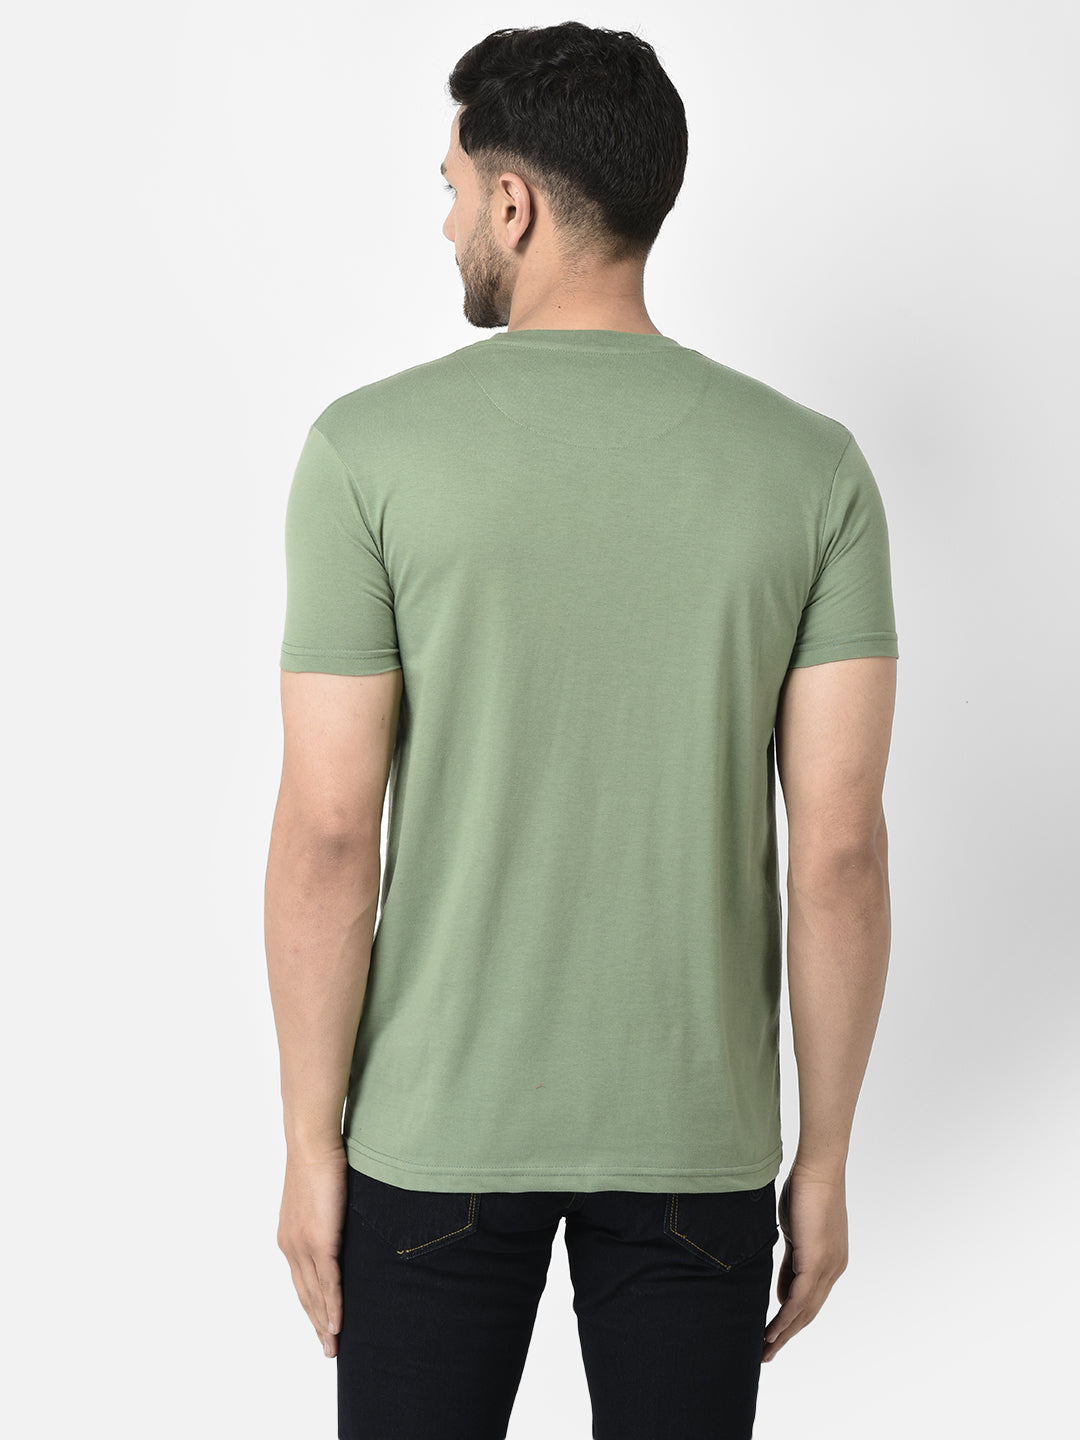 Cobb Green Printed Slim Fit T-Shirt